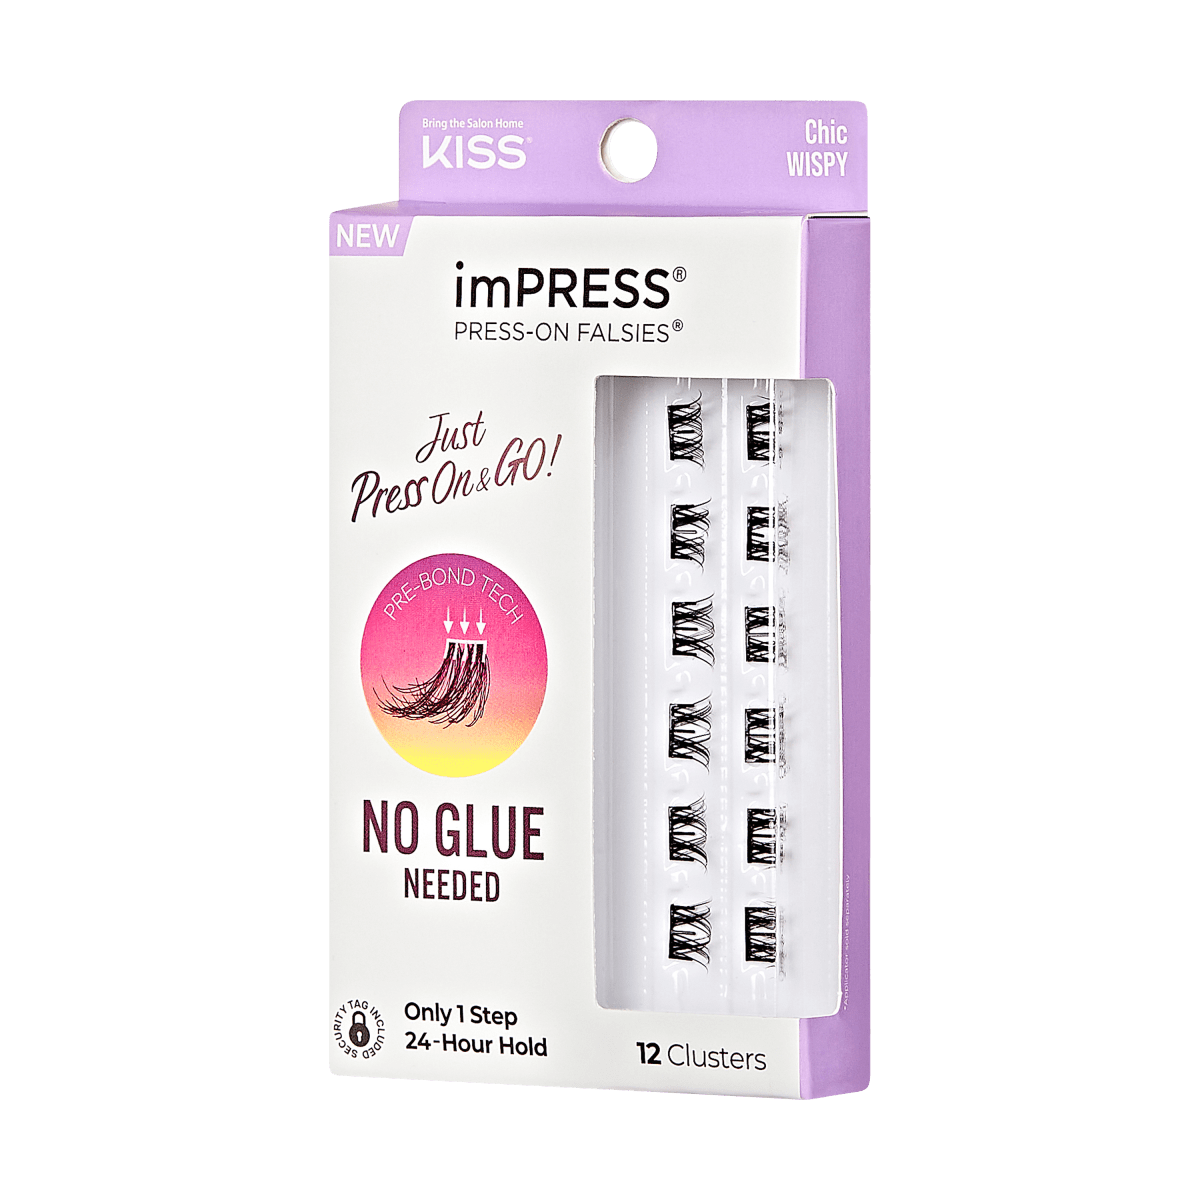 imPRESS Press-On Falsies Minipack 12 Clusters - Chic